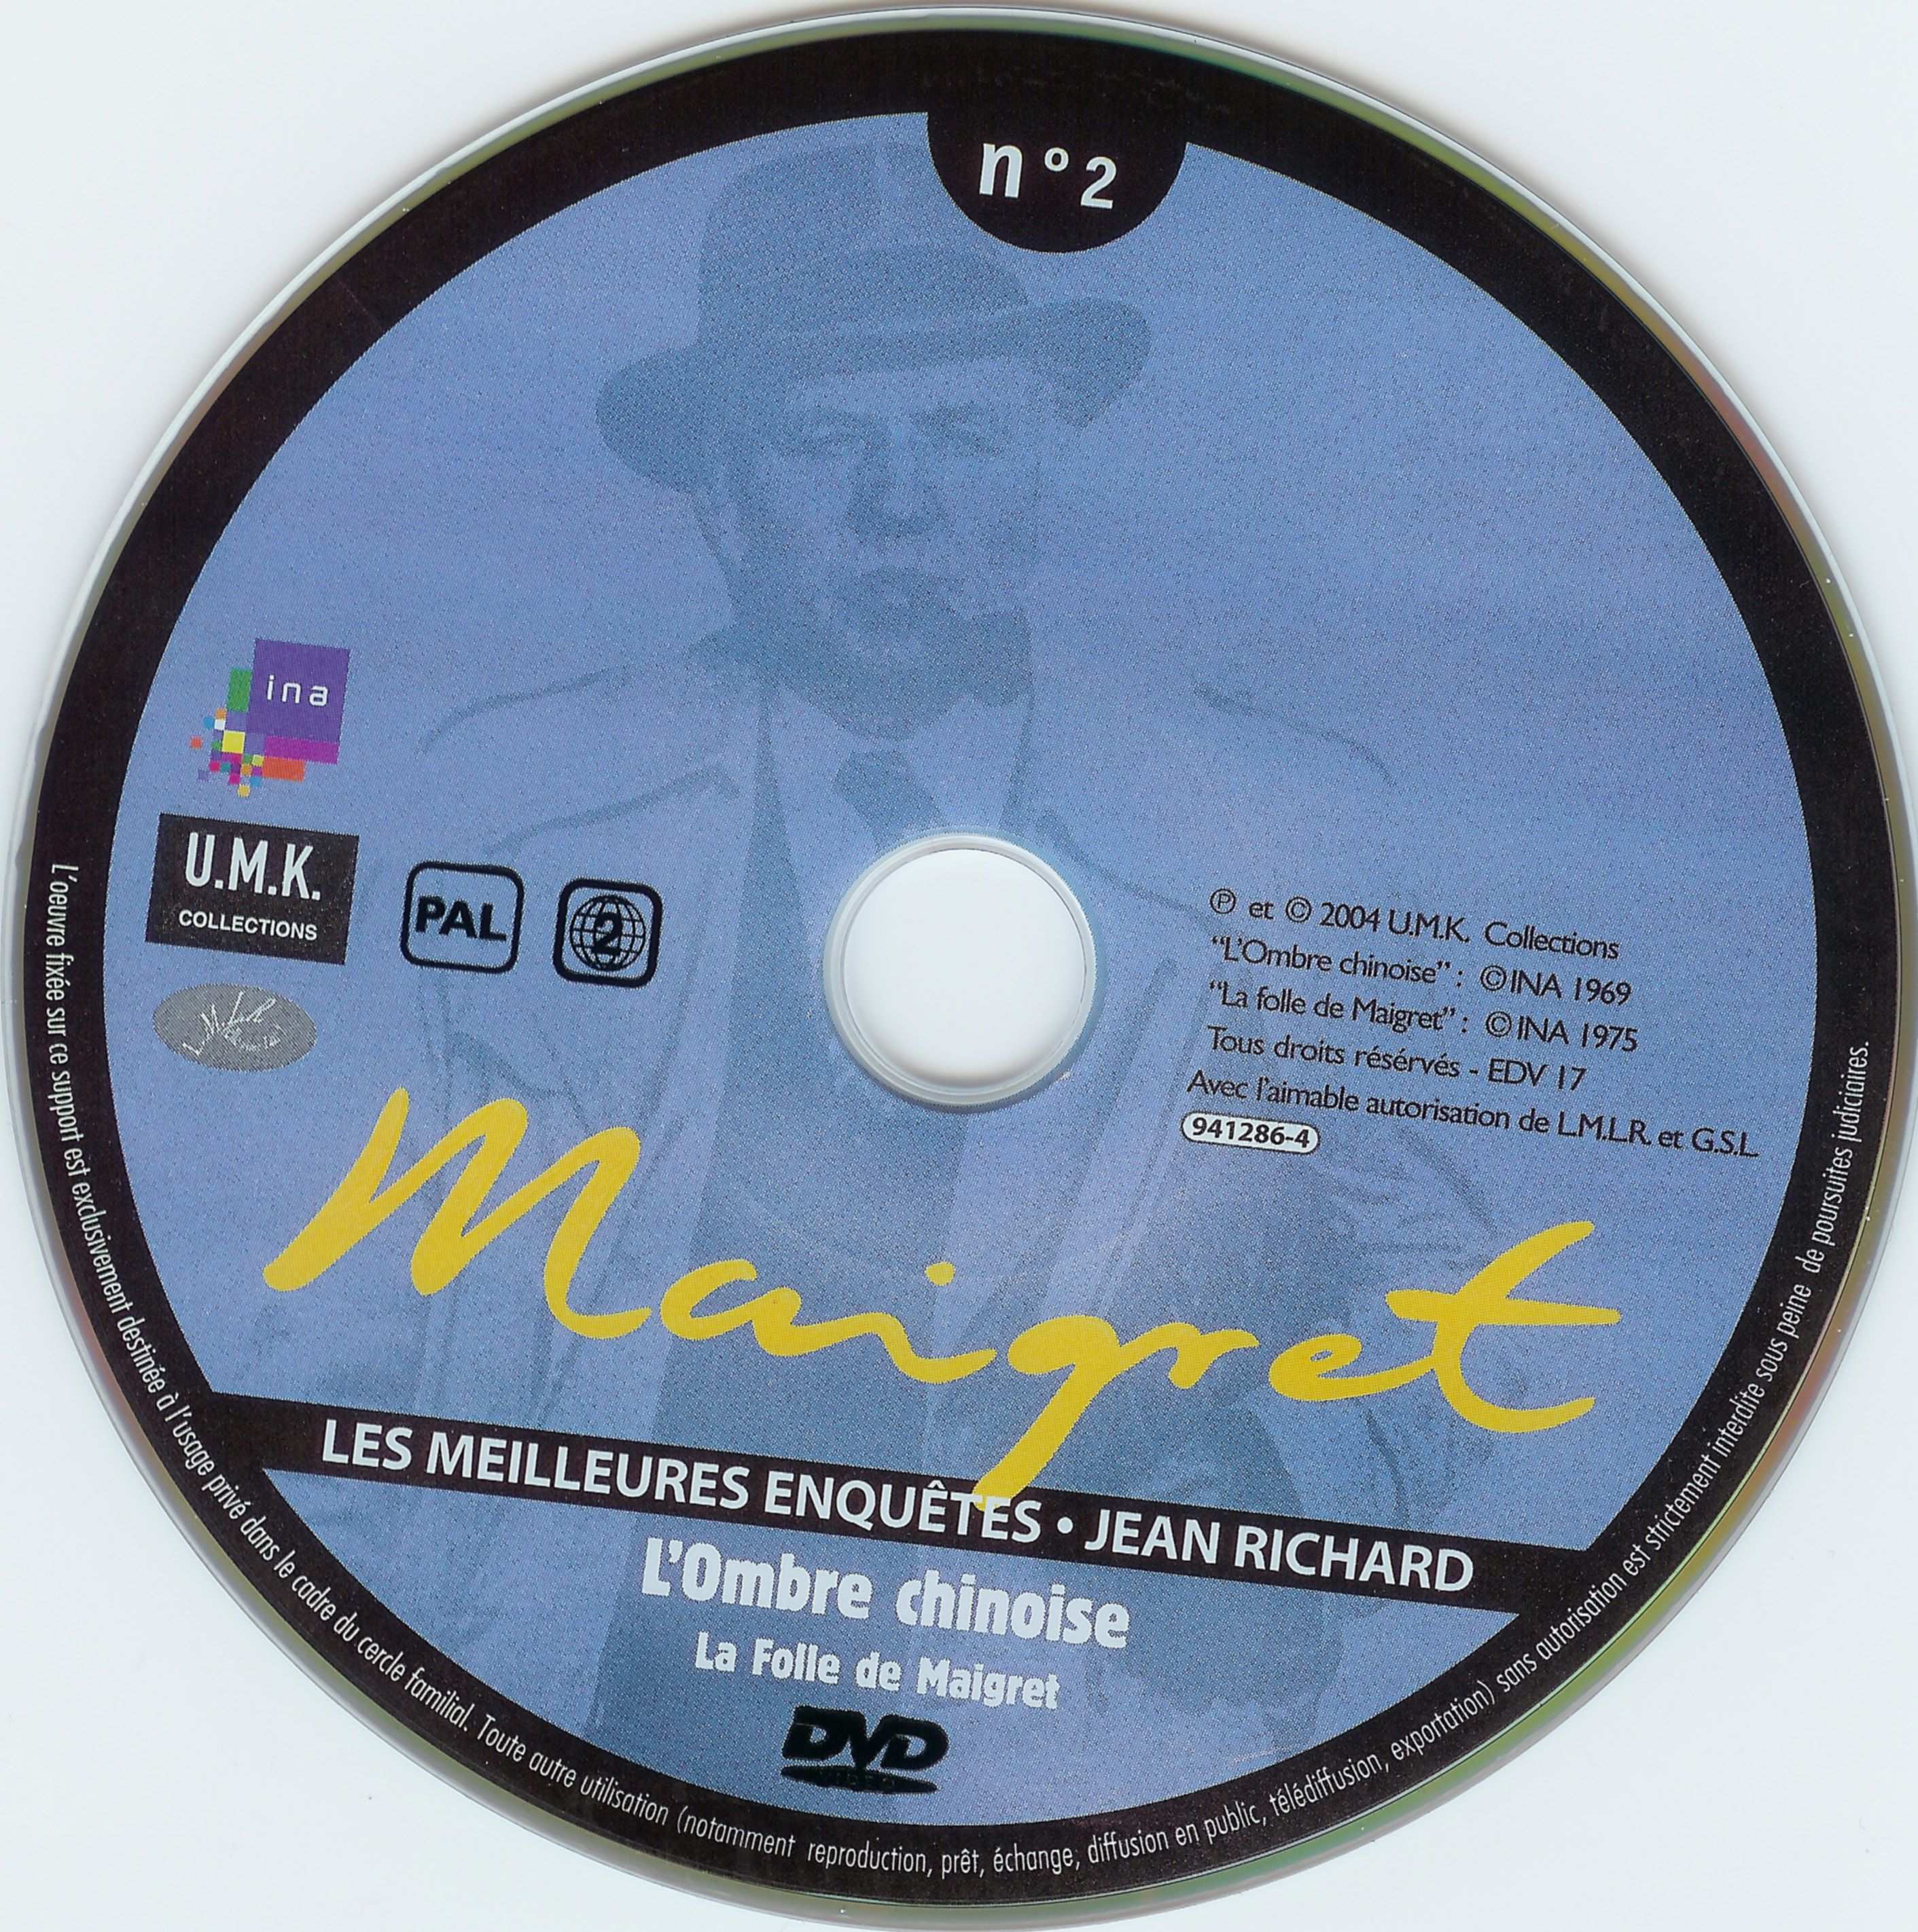 Maigret (Jean Richard) vol 02